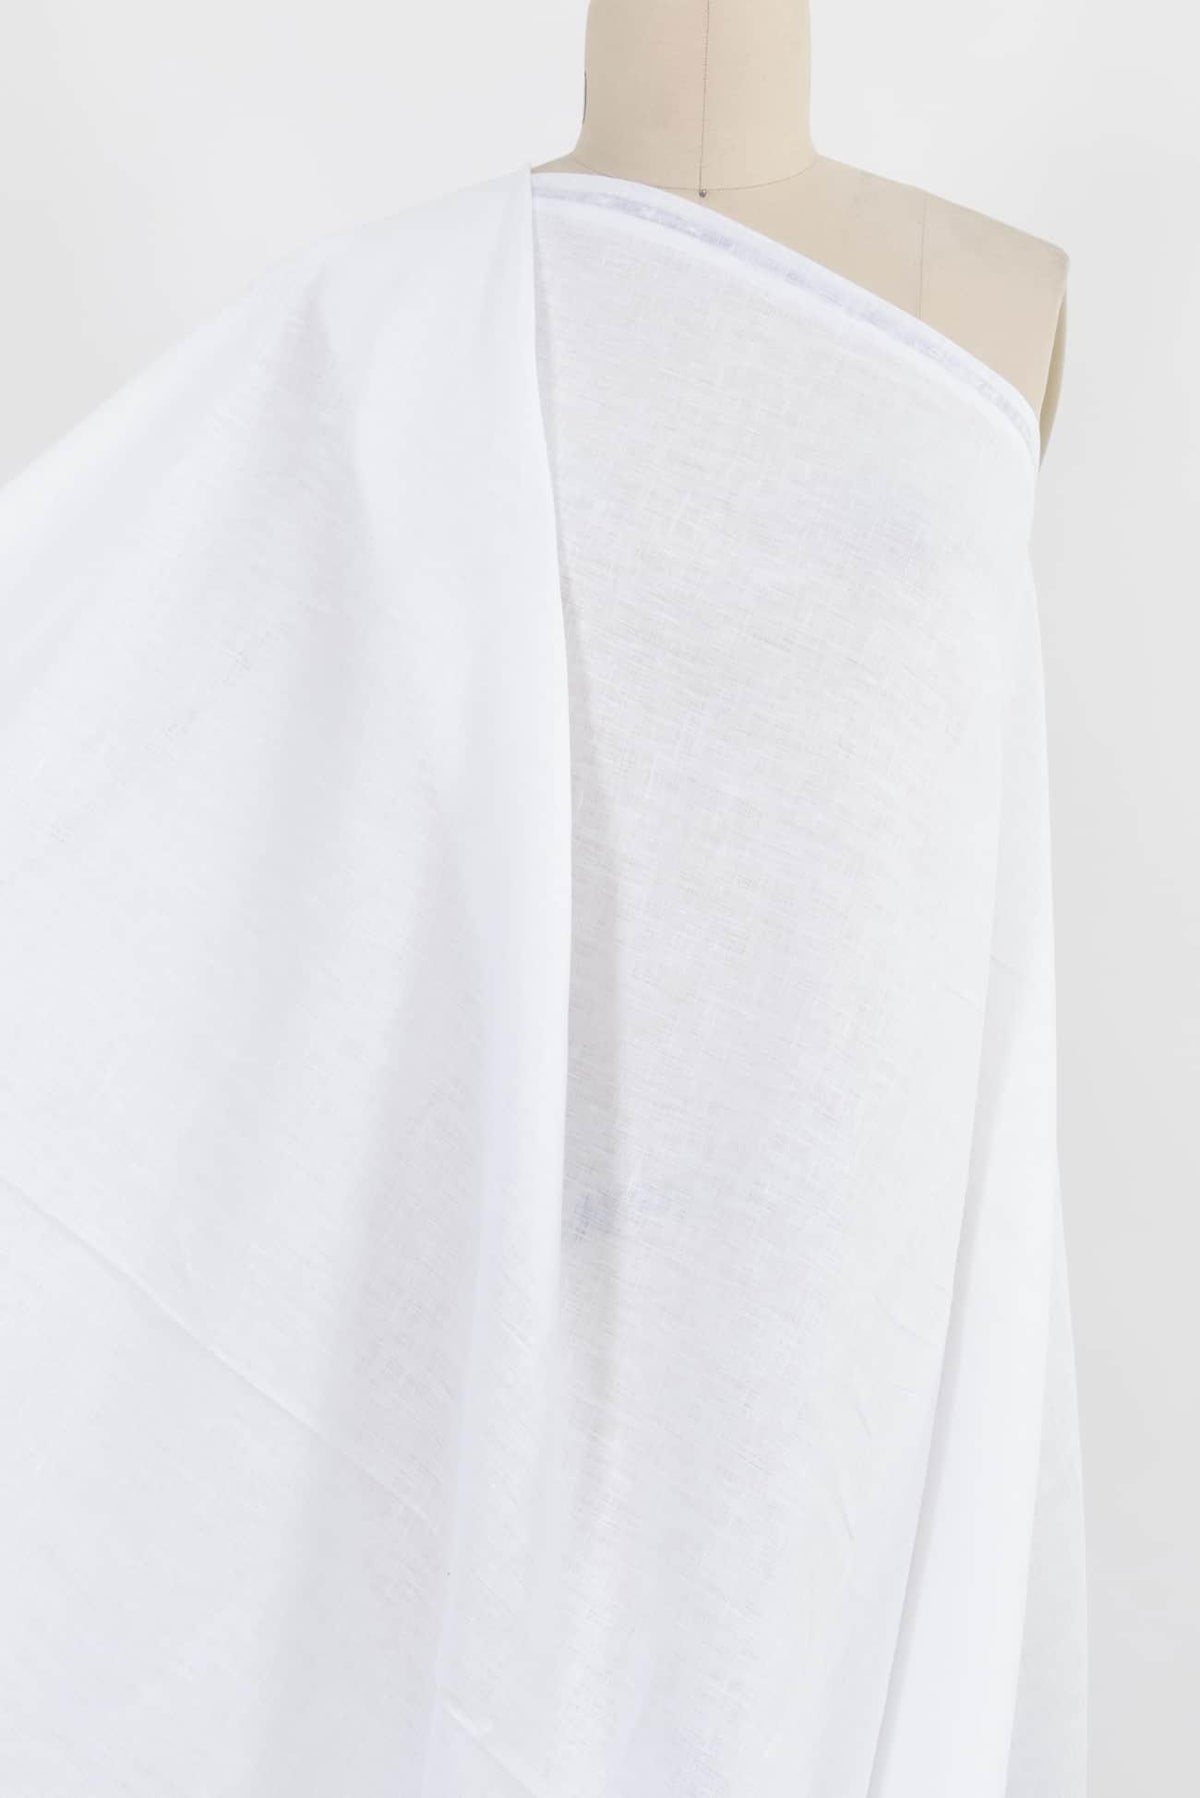 Artic White Linen Woven - Marcy Tilton Fabrics